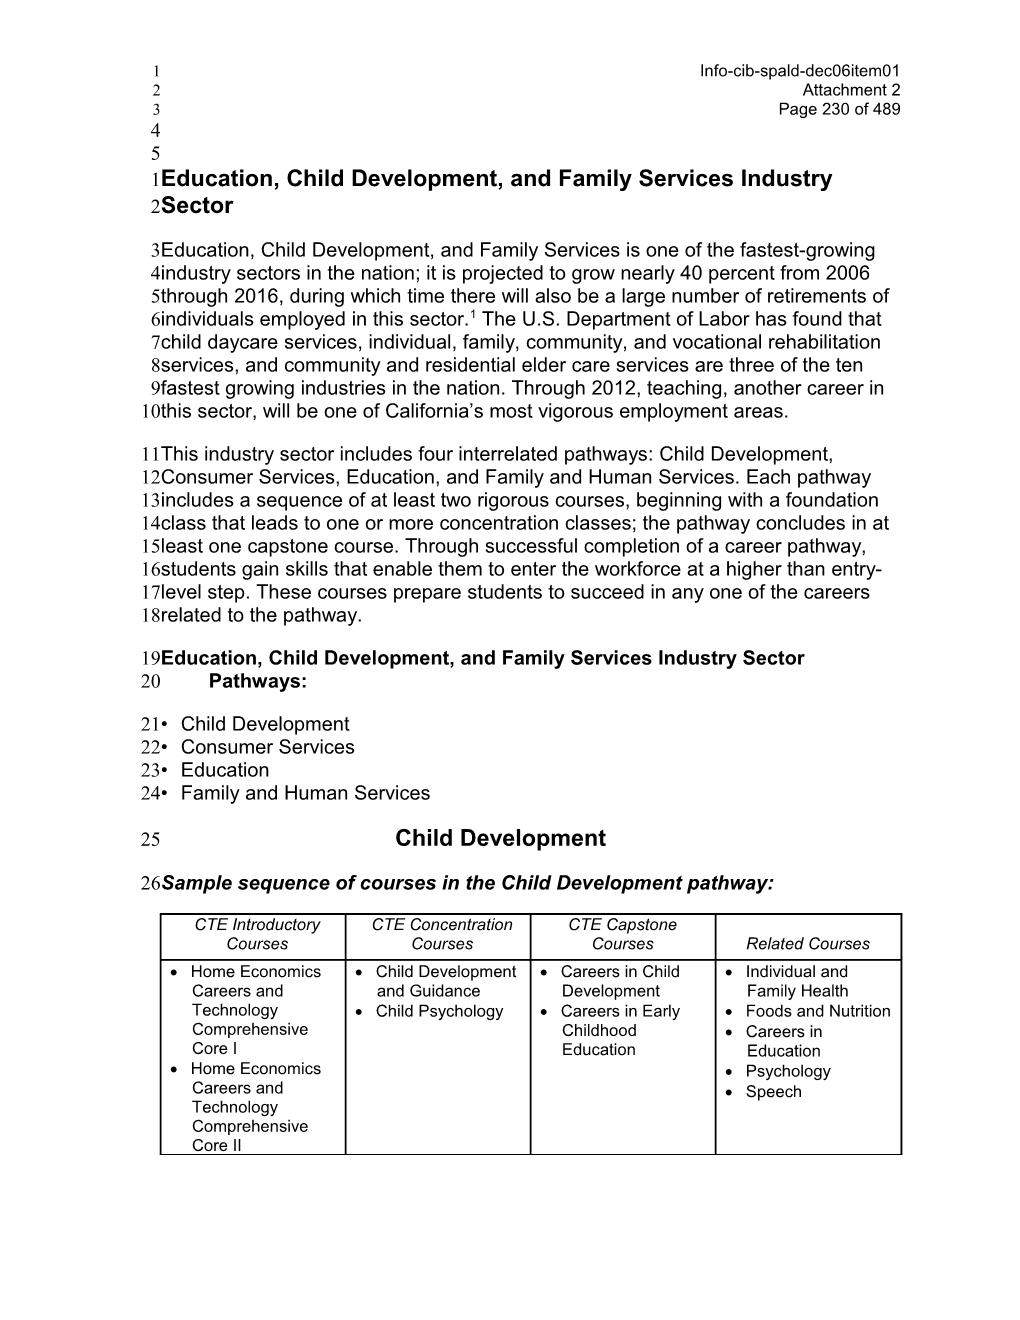 December 2006 SPALD Item 1 Attachment 2 - Information Memorandum (CA State Board of Education)